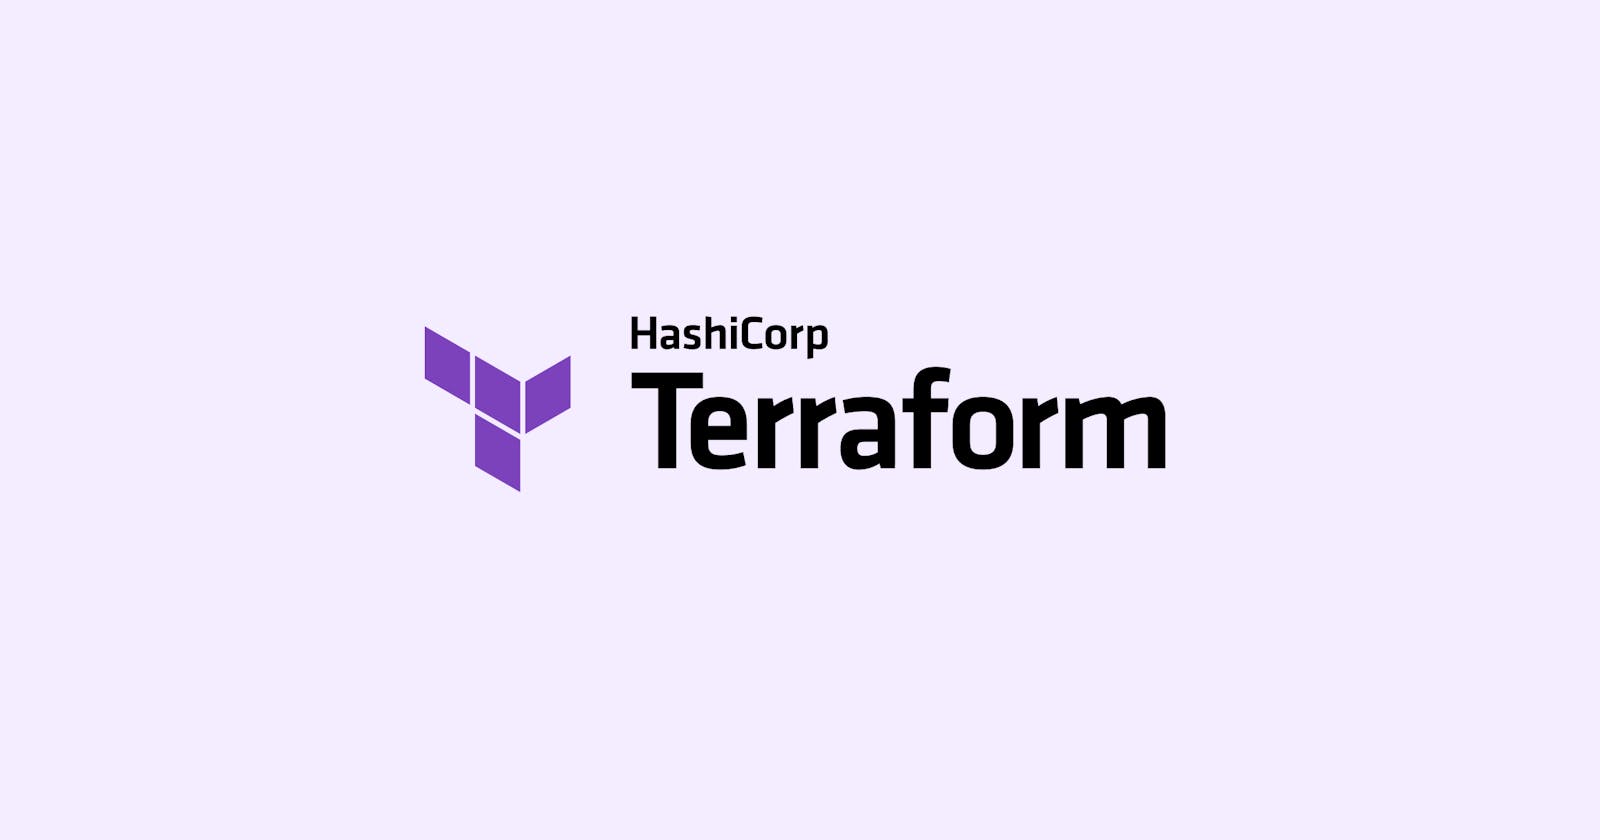 What is Terraform?